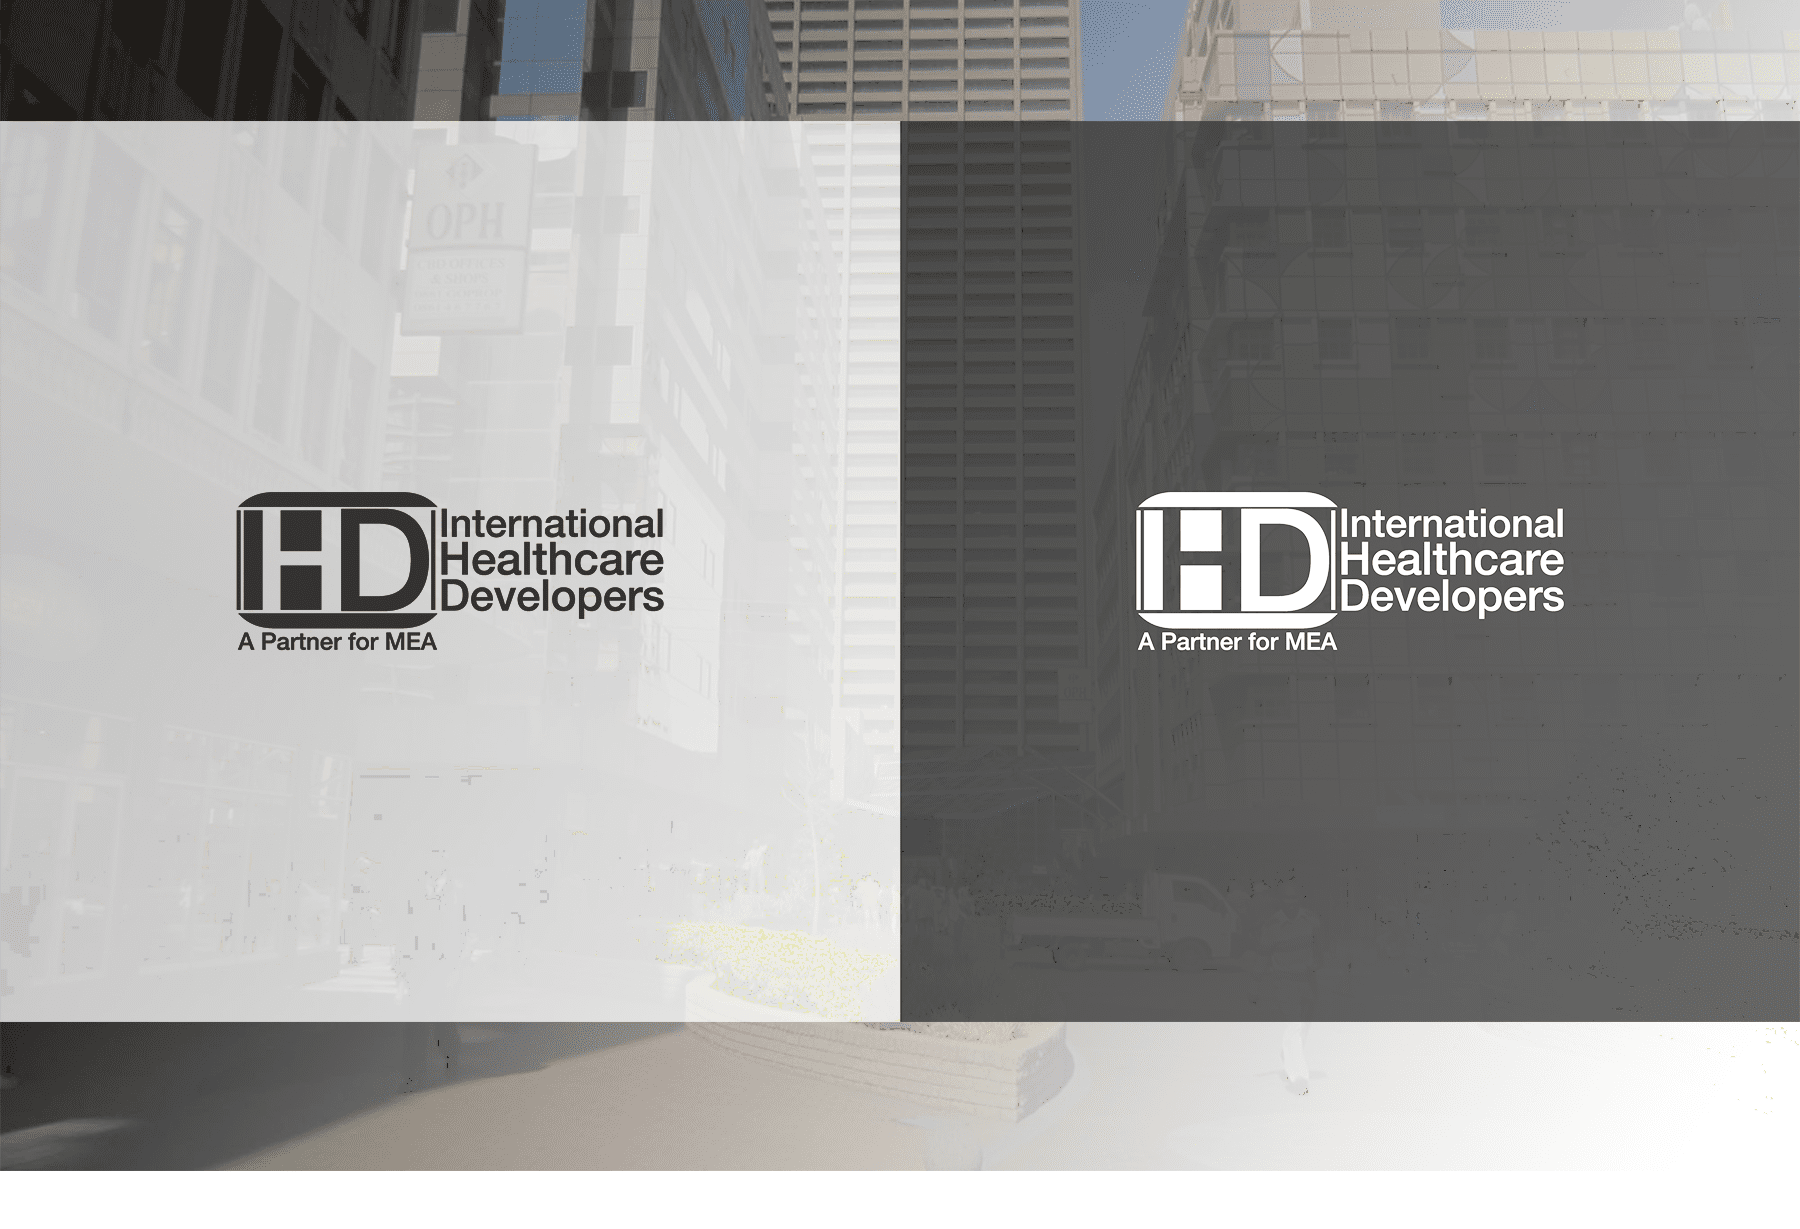 IHD-International Healthcare Developers